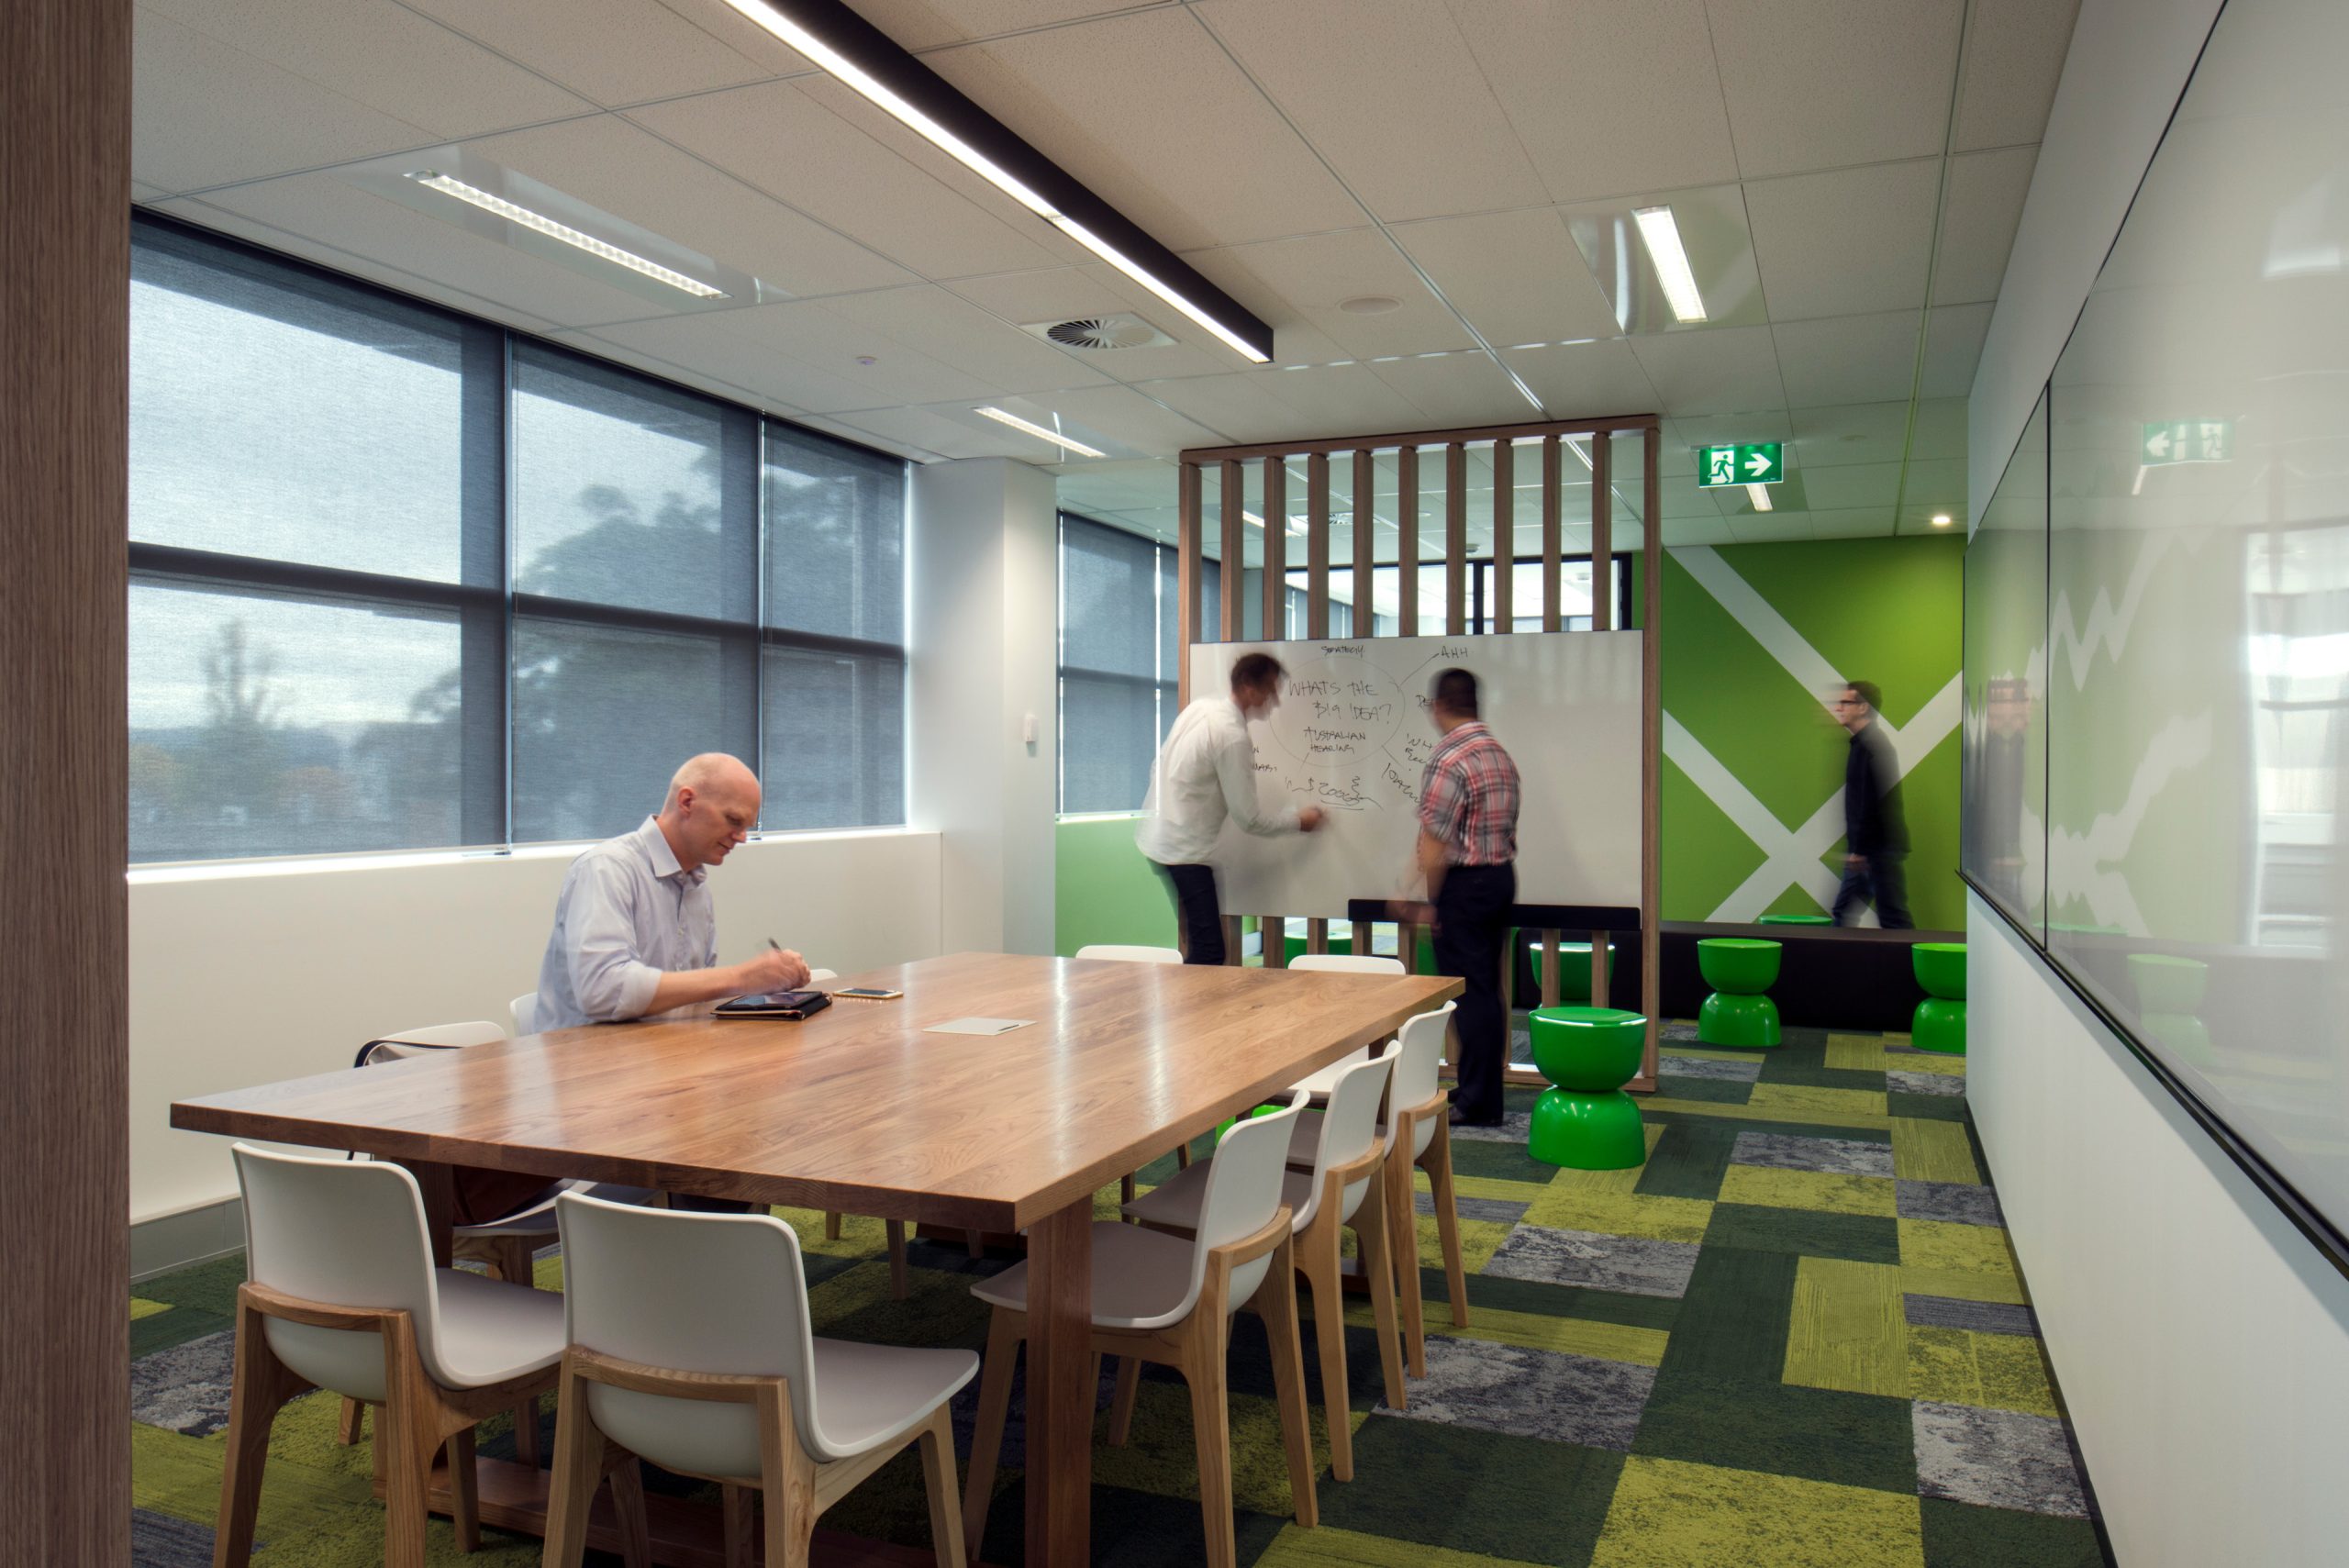 3 collaborative work room australian hearing hub taylor construction education fitout